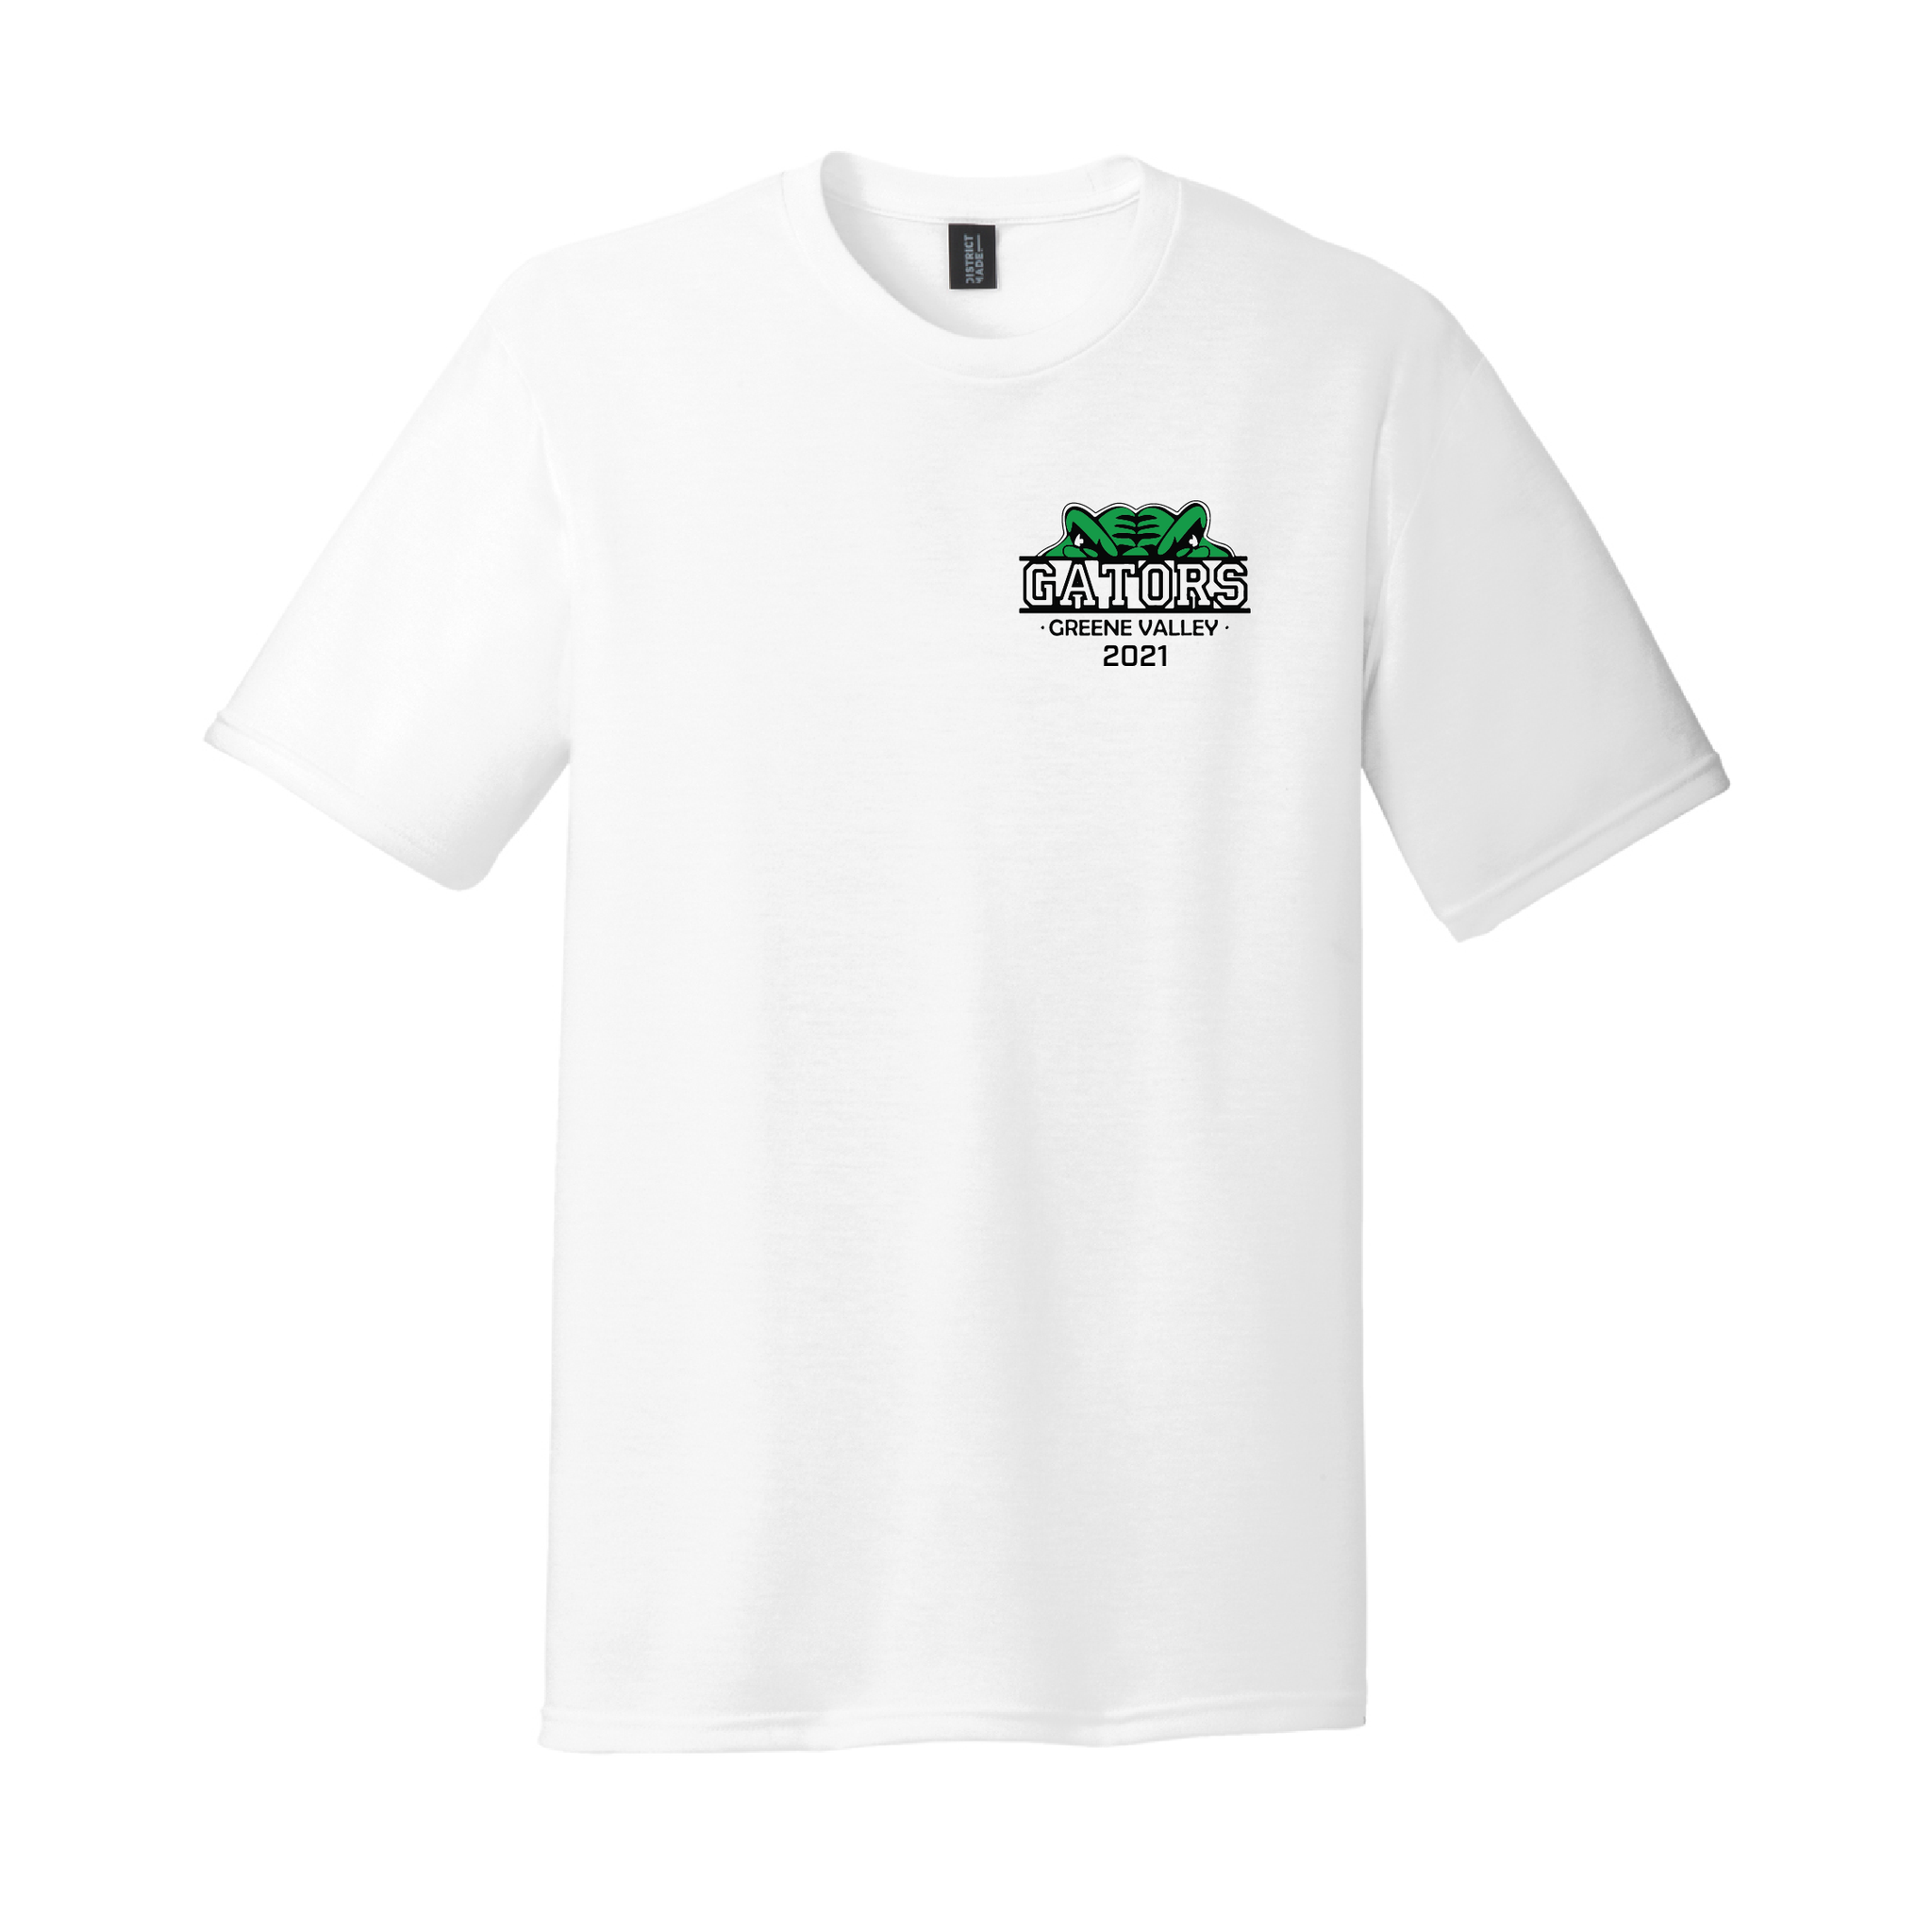 Greene Valley Gators 2021 Tri-Blend T-Shirt